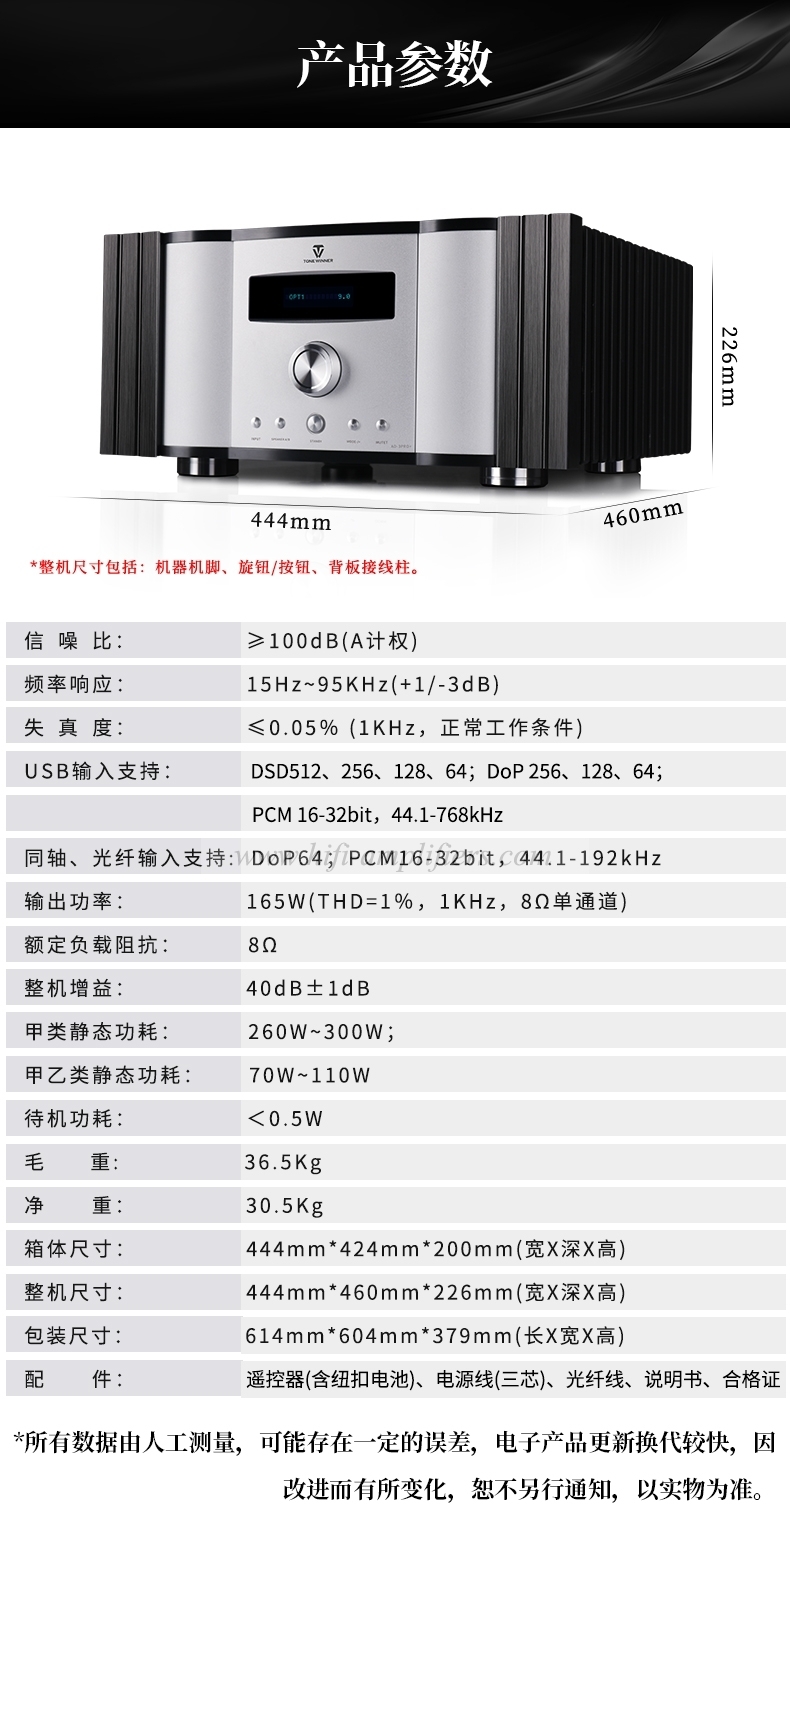 ToneWinner AD-3PRO+ Clase A ES9038 DSD Amplificador de potencia de decodificación HIFI Full Balanced PHONO/MM/MC